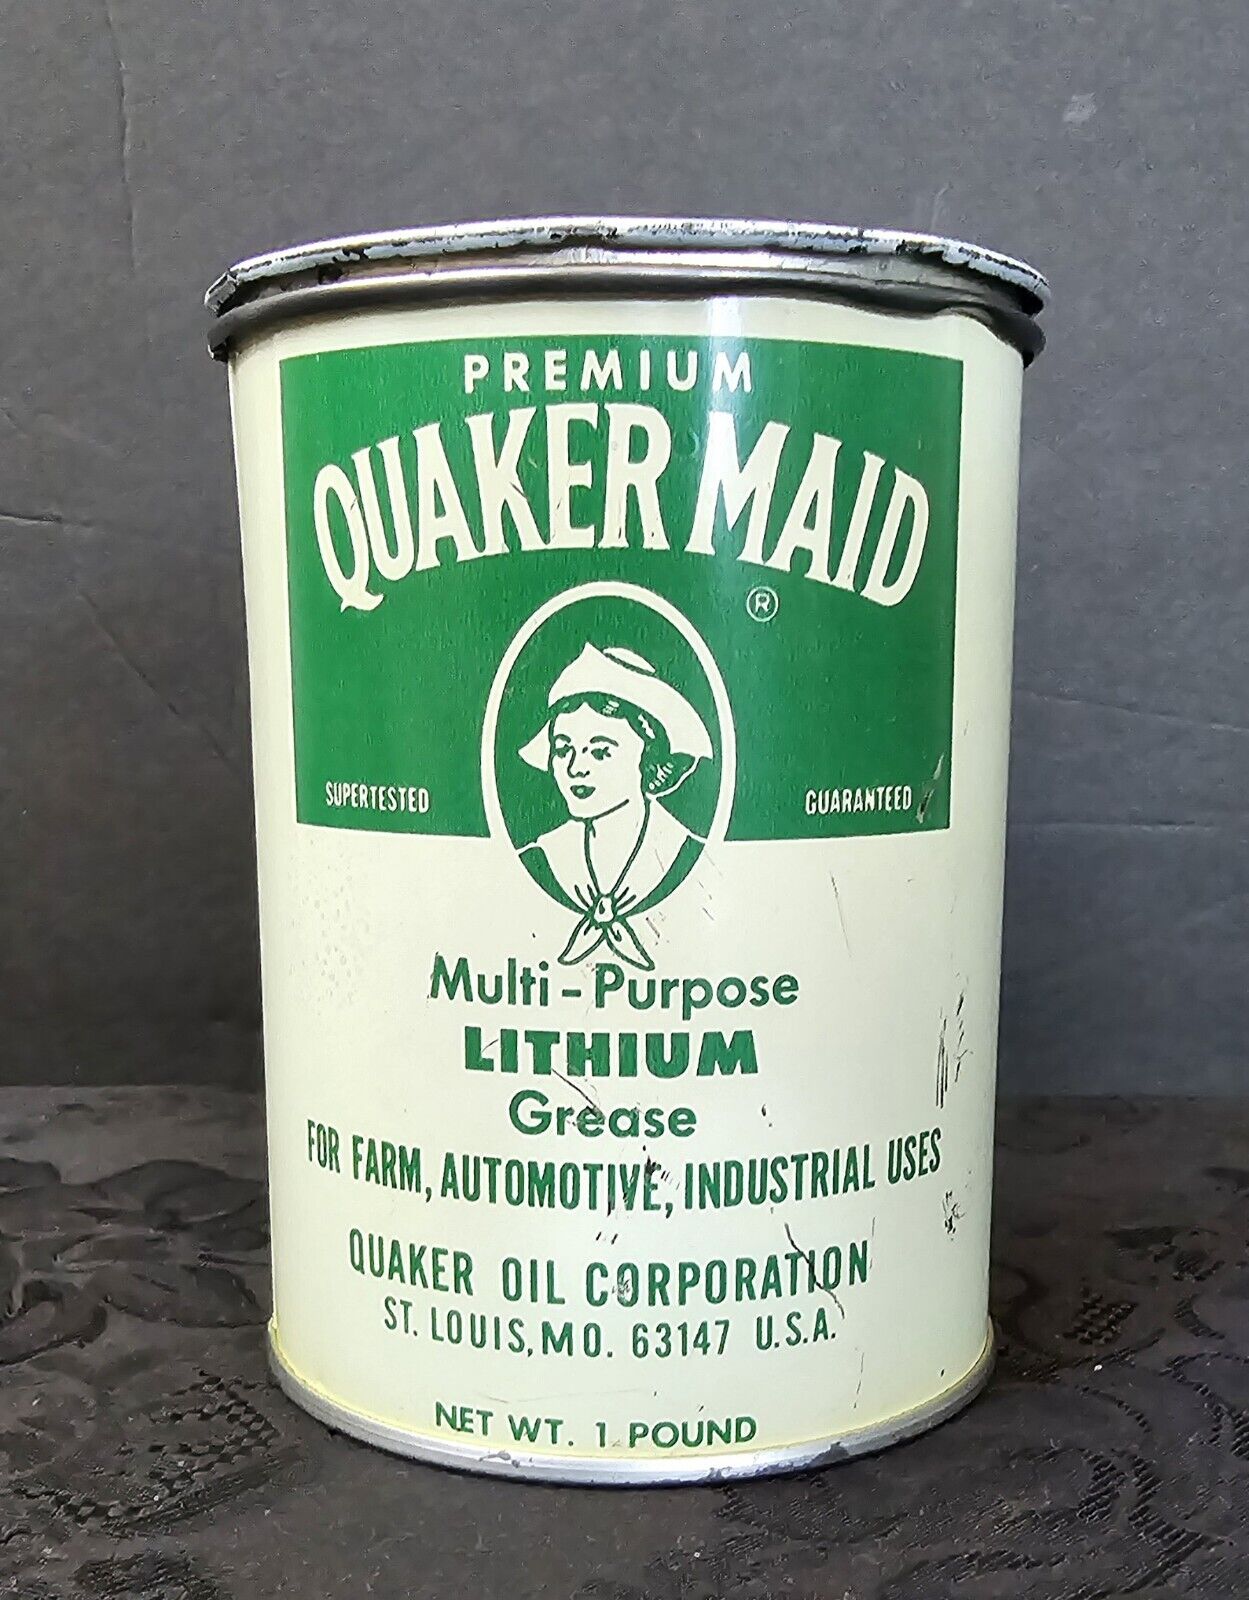 VTG - 1960s Quaker Maid multi-purpose lithium grease tin - 1 pound